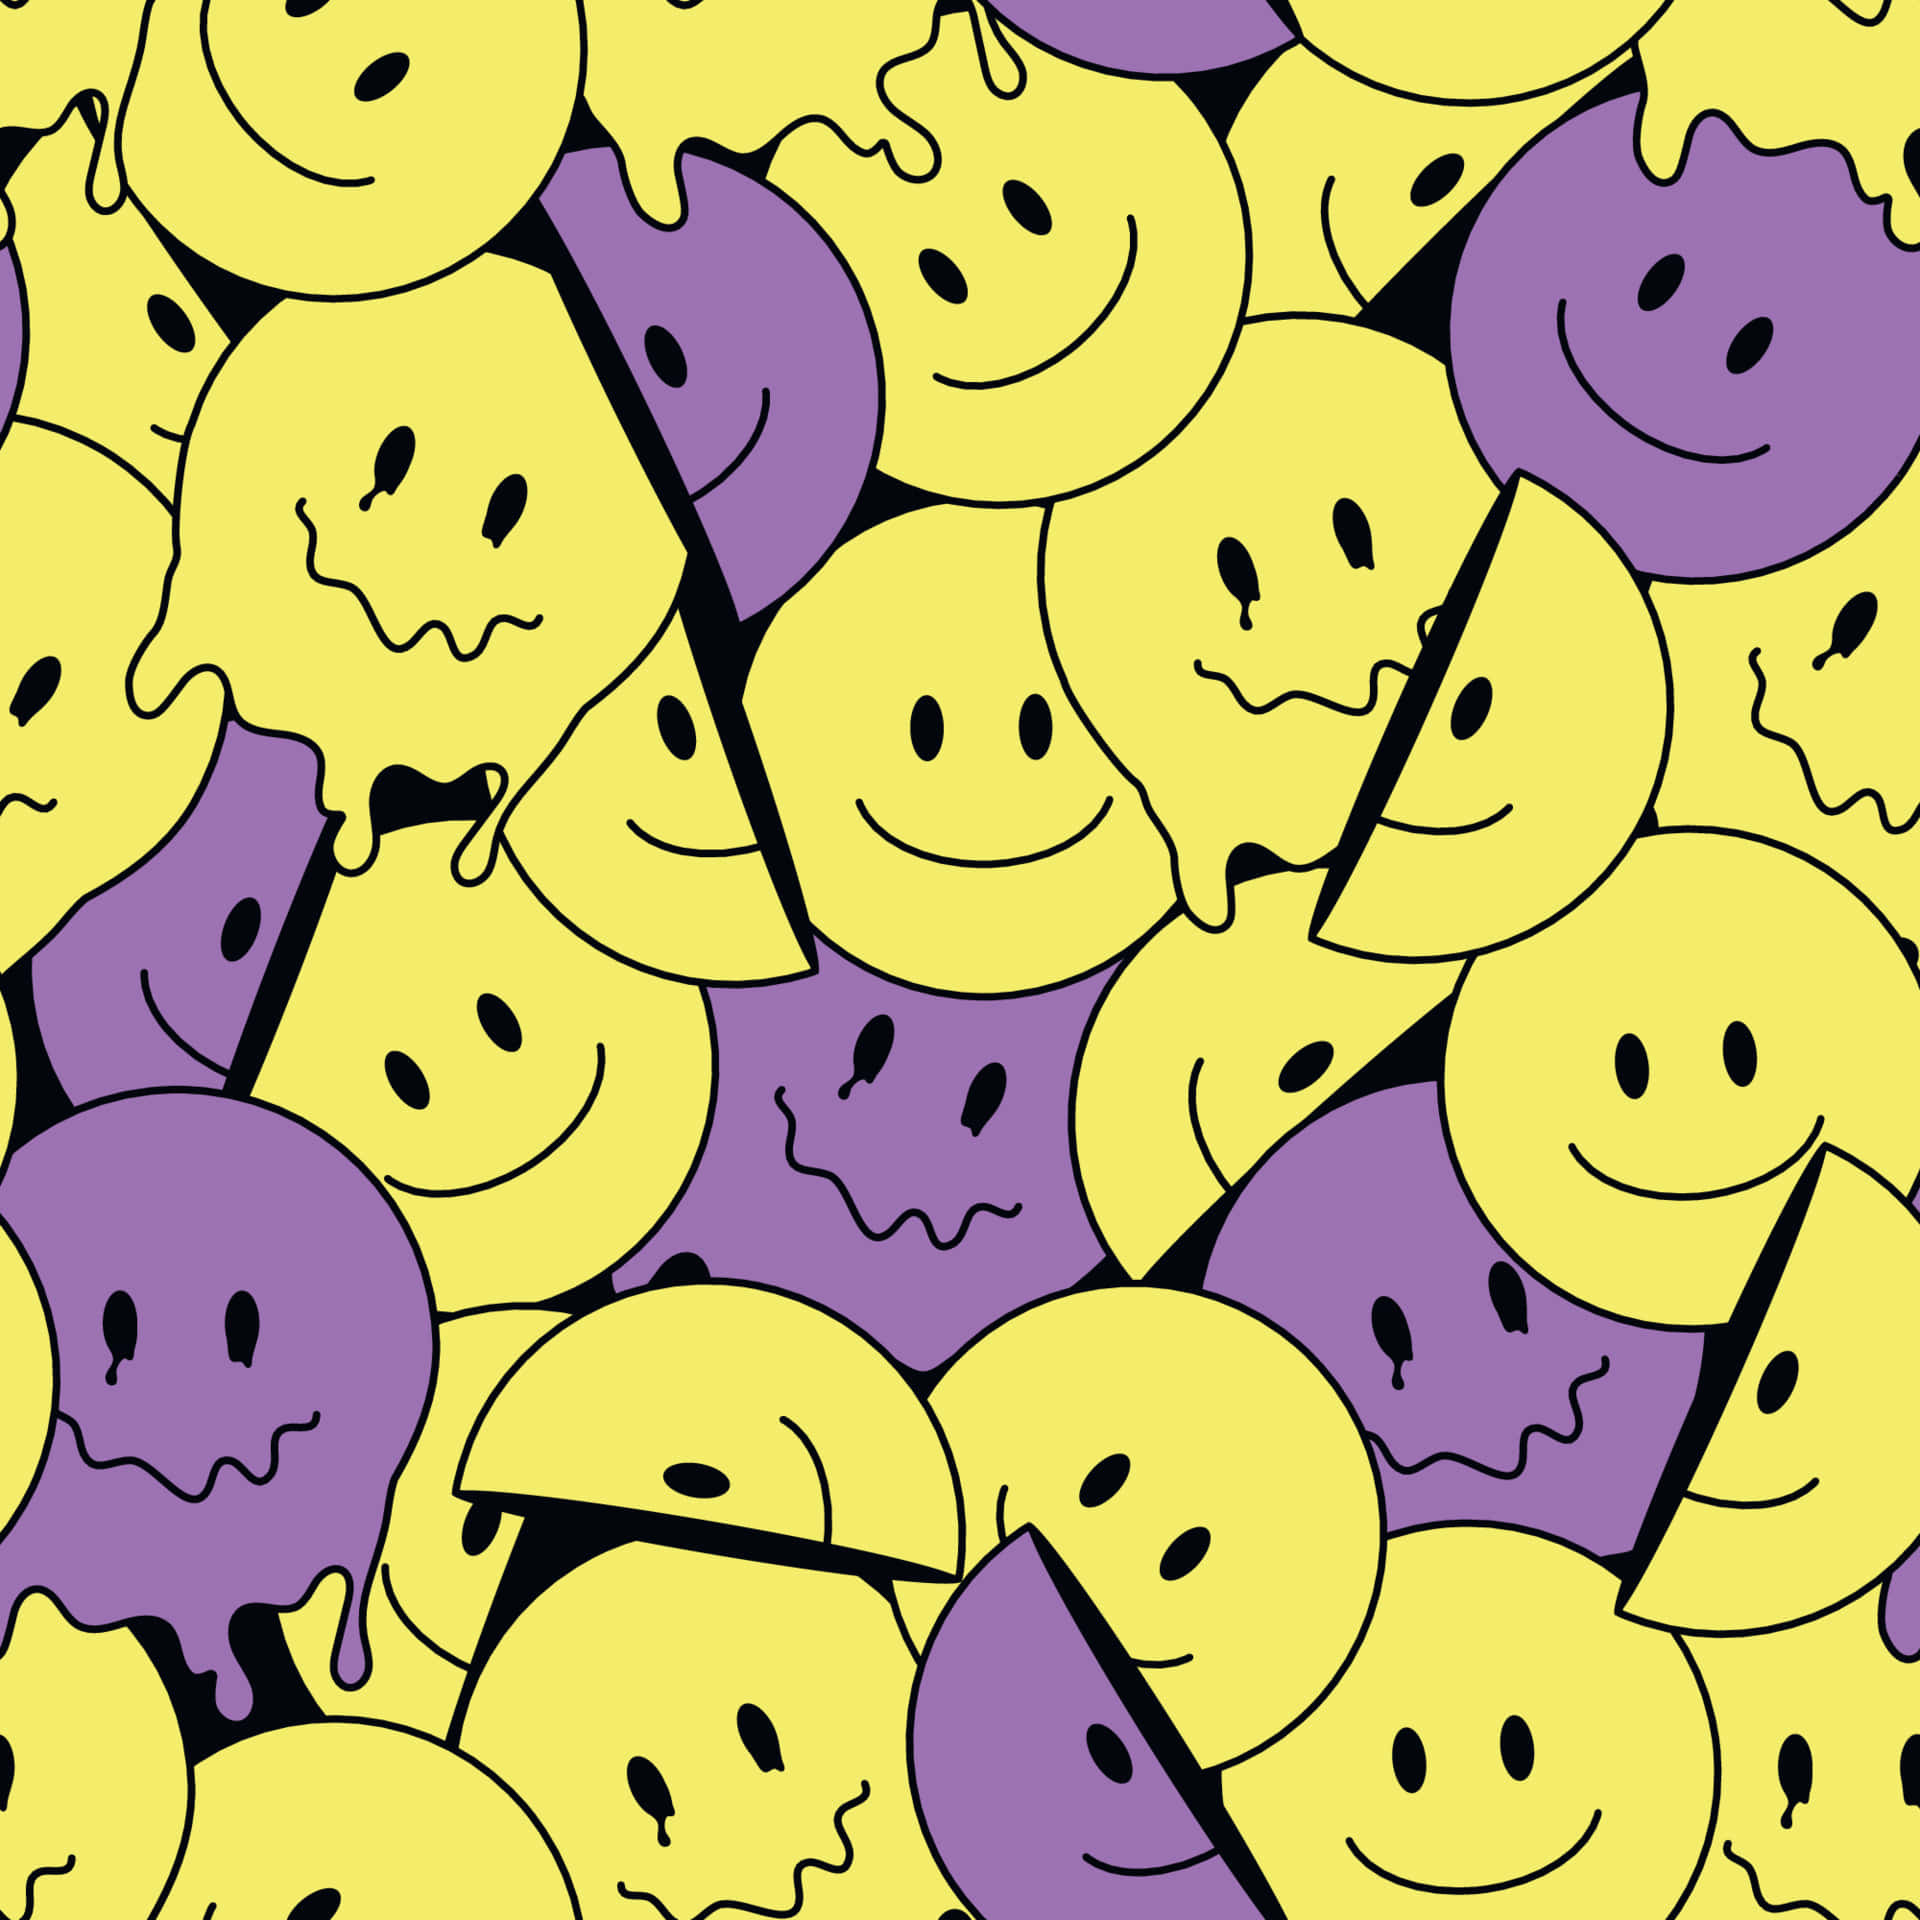 Melting Smiley Face Pattern Wallpaper